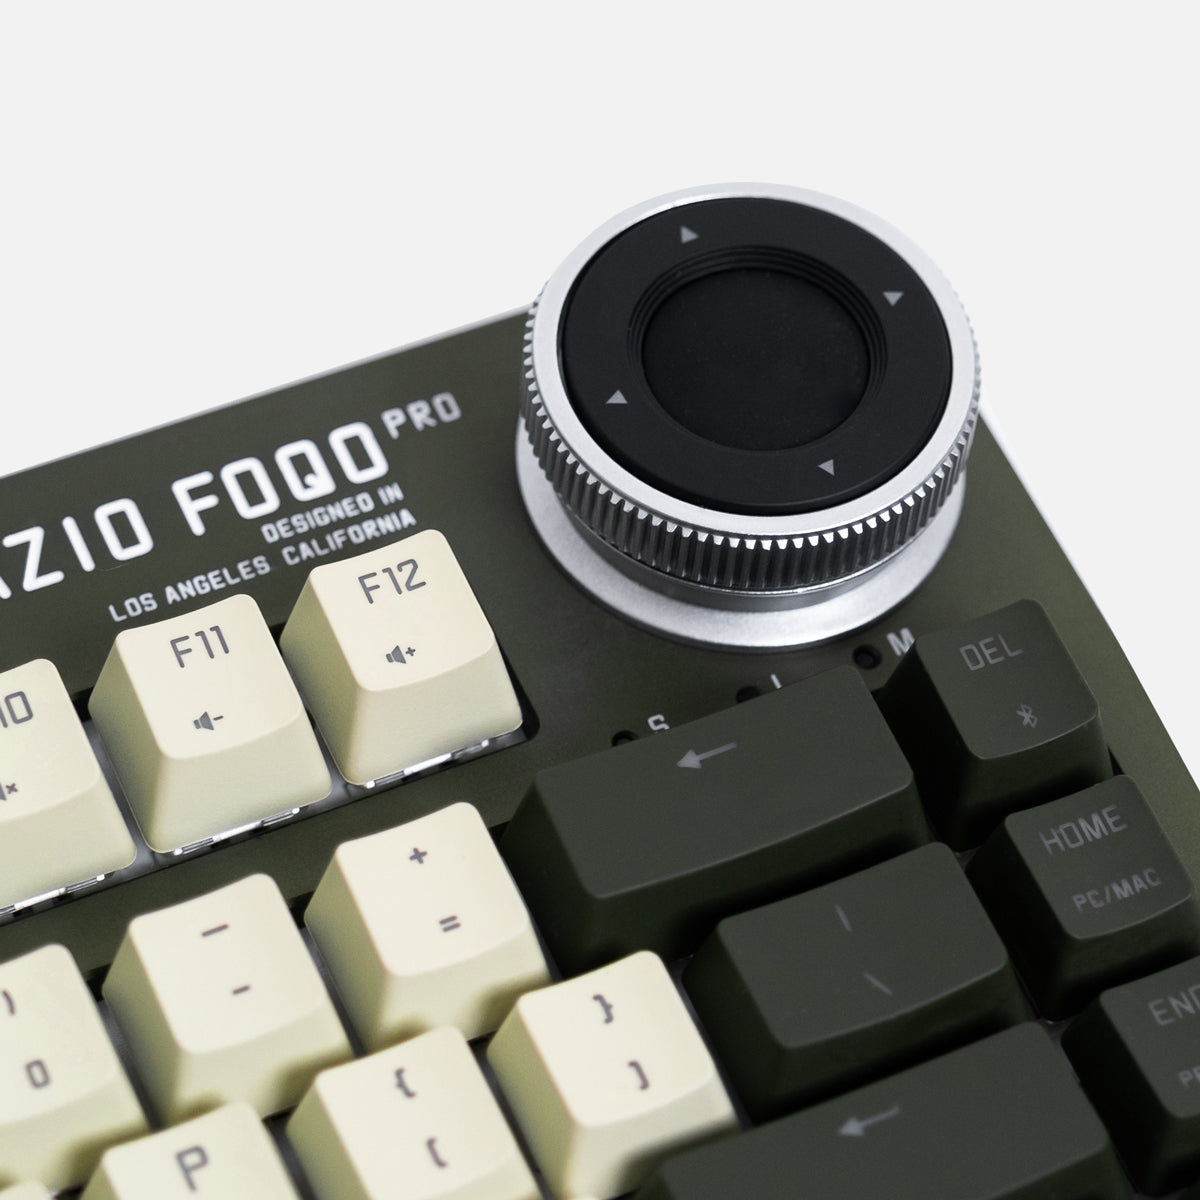 Foqo pro 無線熱插拔鍵盤